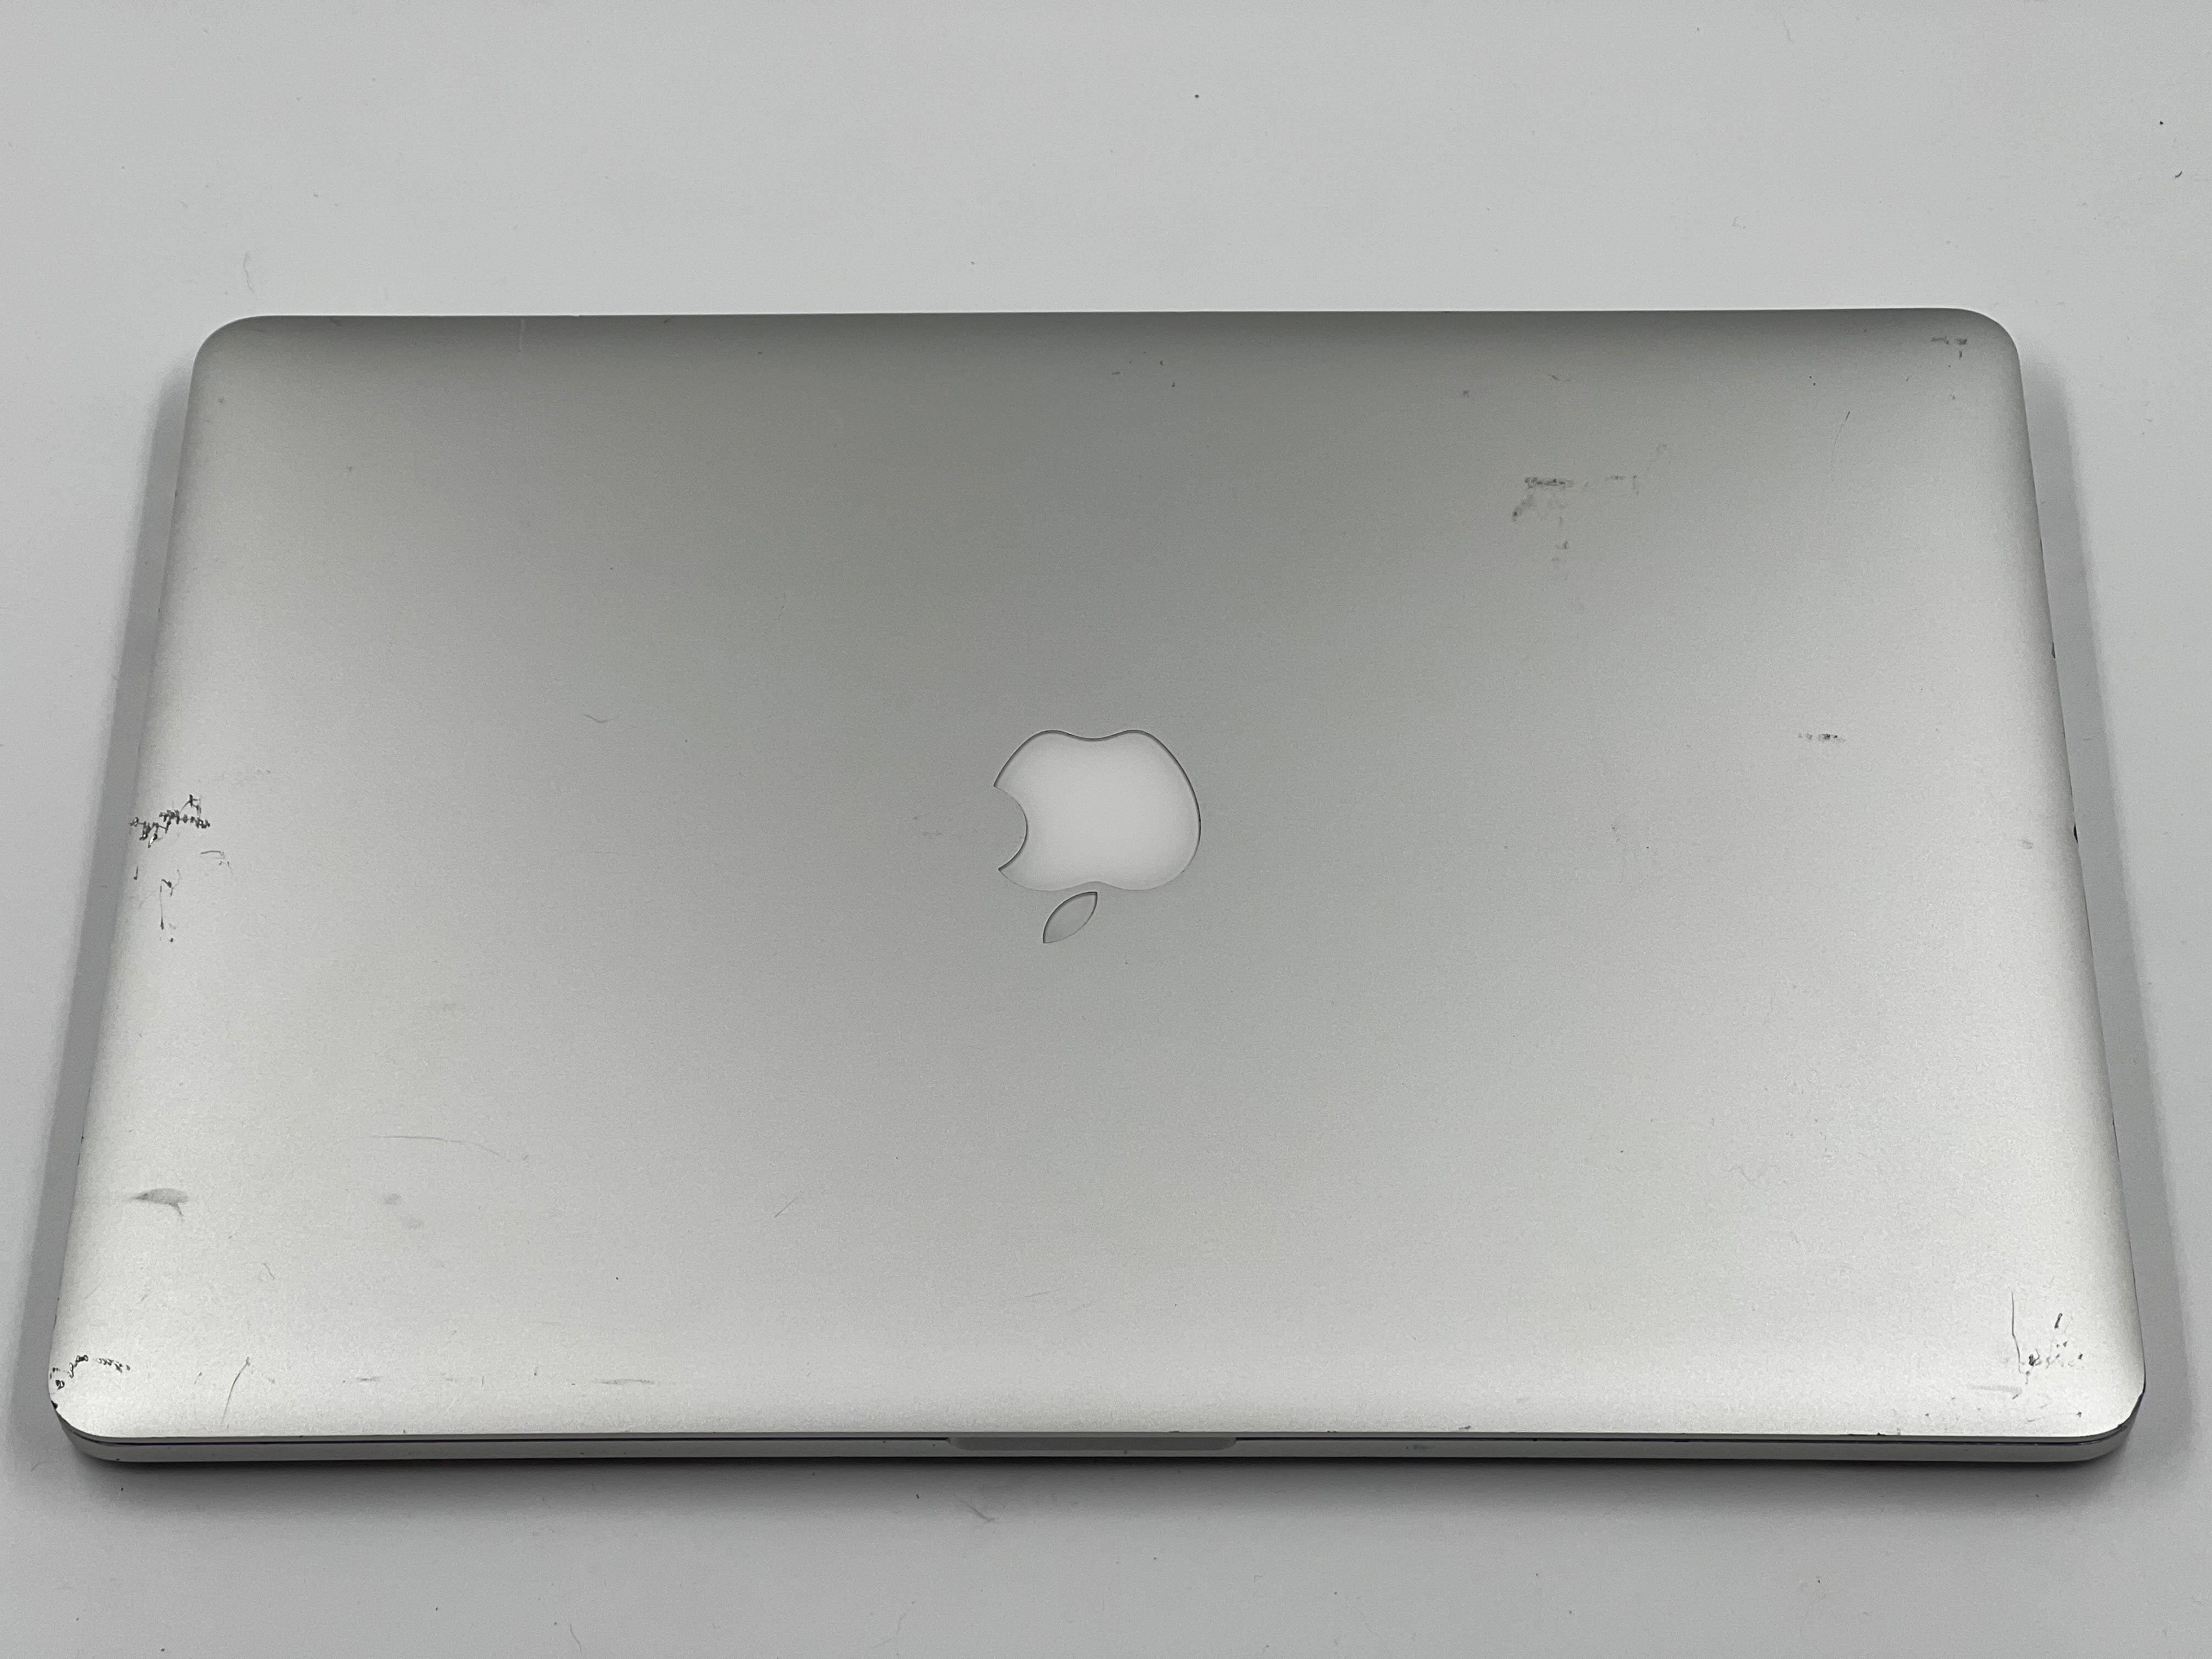 Laptop Apple Macbook Pro 15 2015 i7 16GB 256GB A1398